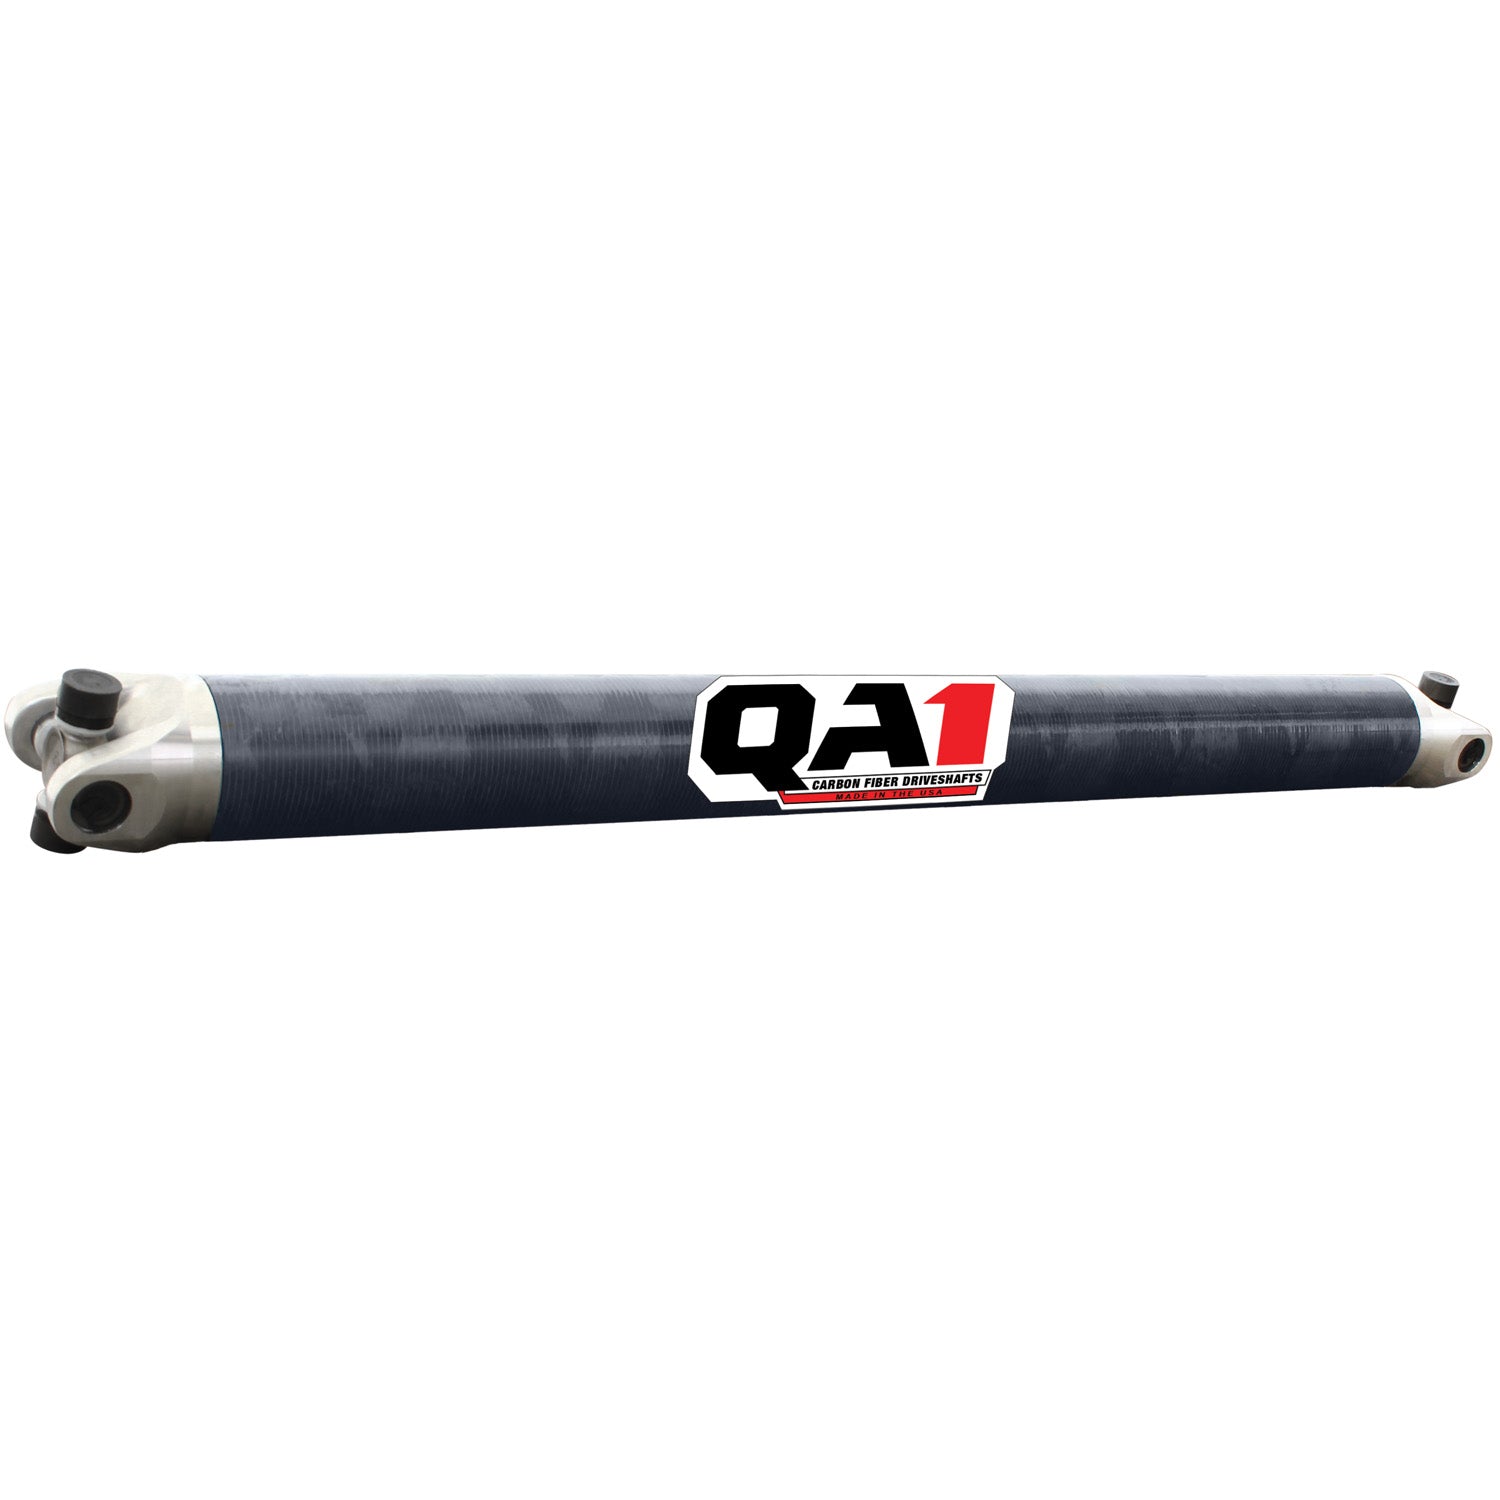 QA1 JJ-11243 Driveshaft, Cf, Ct-Dirt LM, 35.00 XM 3.2, 1310 U-Joint, 2600Lb.